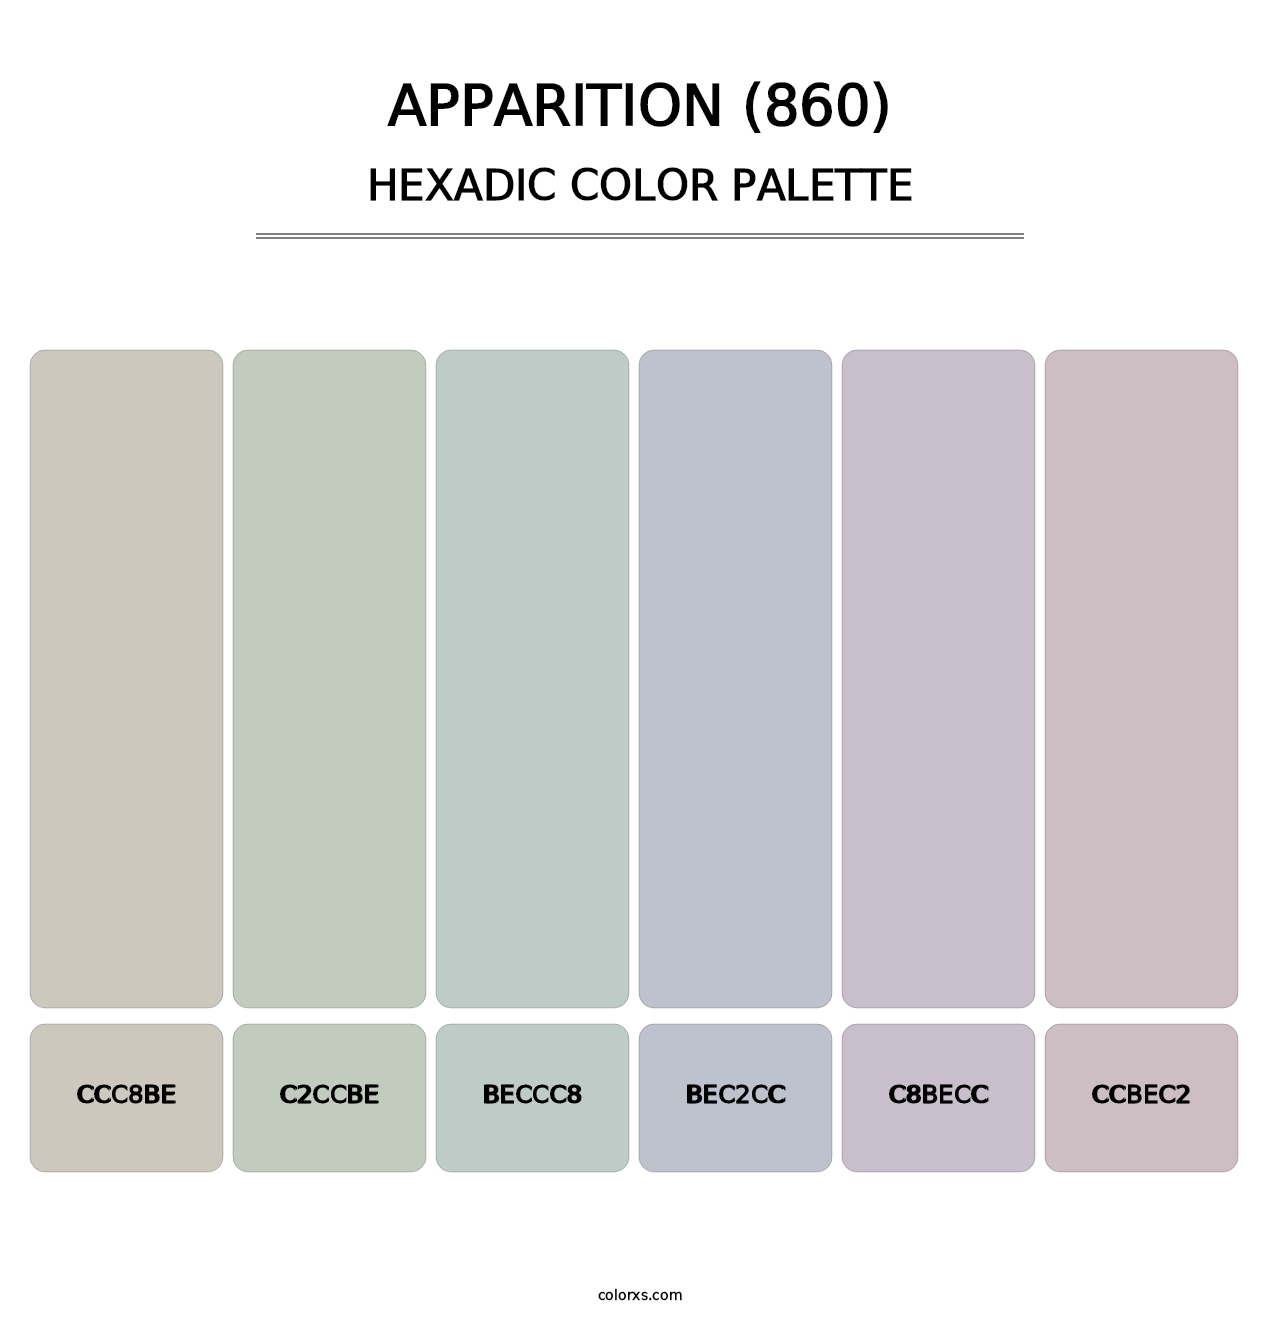 Apparition (860) - Hexadic Color Palette